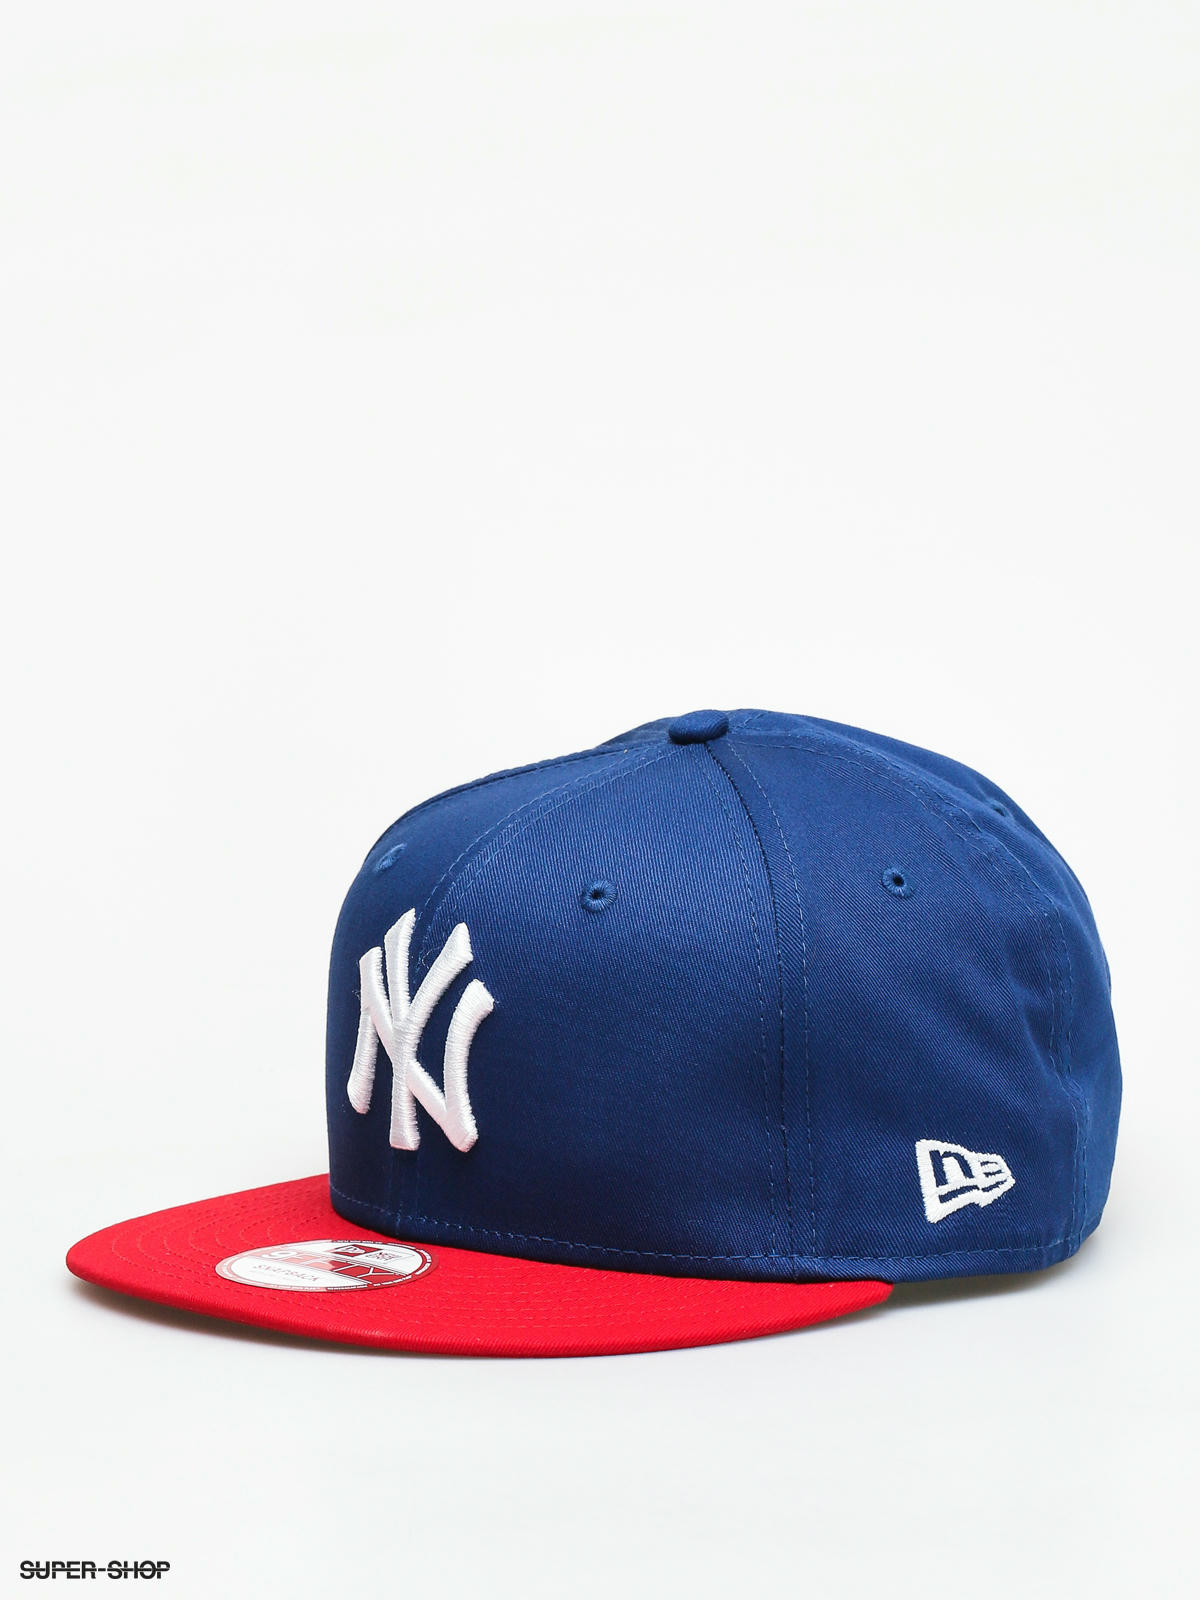 Mua Mũ MLB Mens New York Yankees New Era Red Core Classic Secondary  9TWENTY Adjustable Hat  MLB  Mua tại Vua Hàng Hiệu h007007